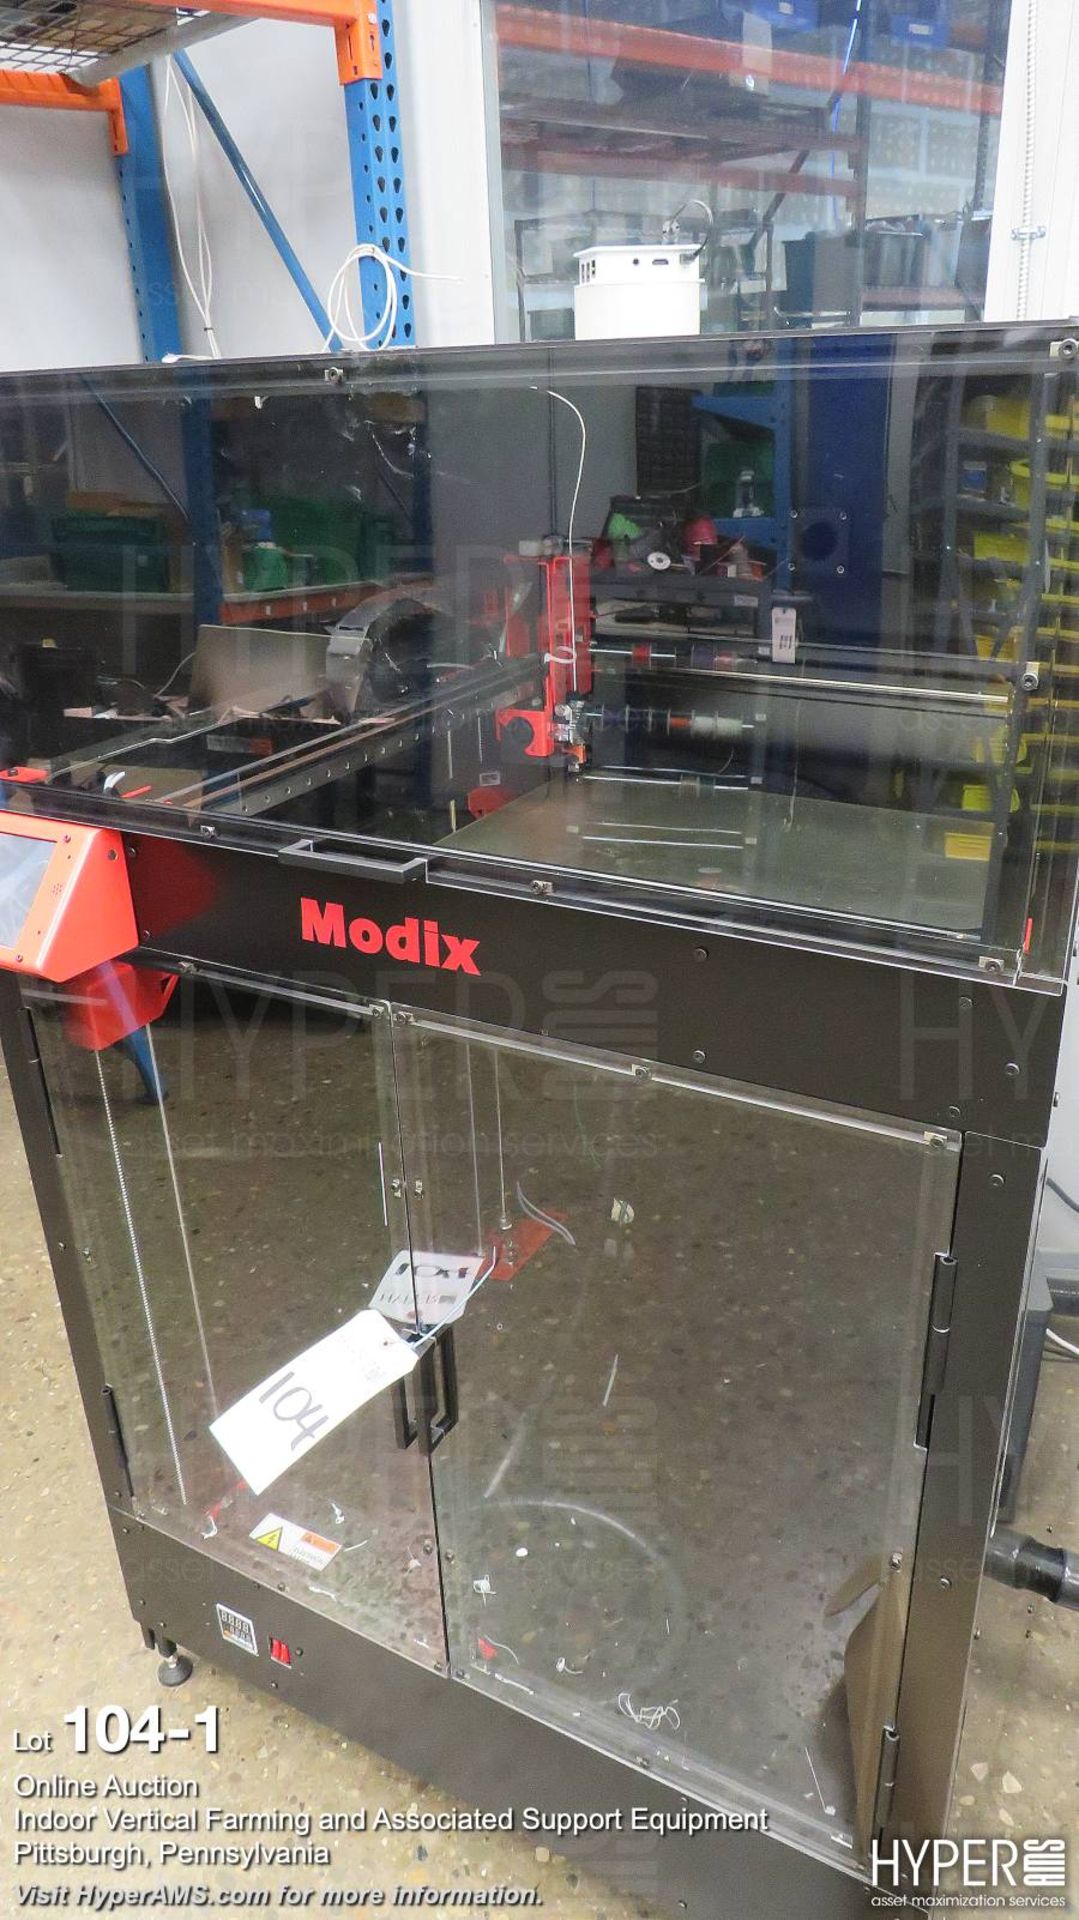 Modix large 3D printer.